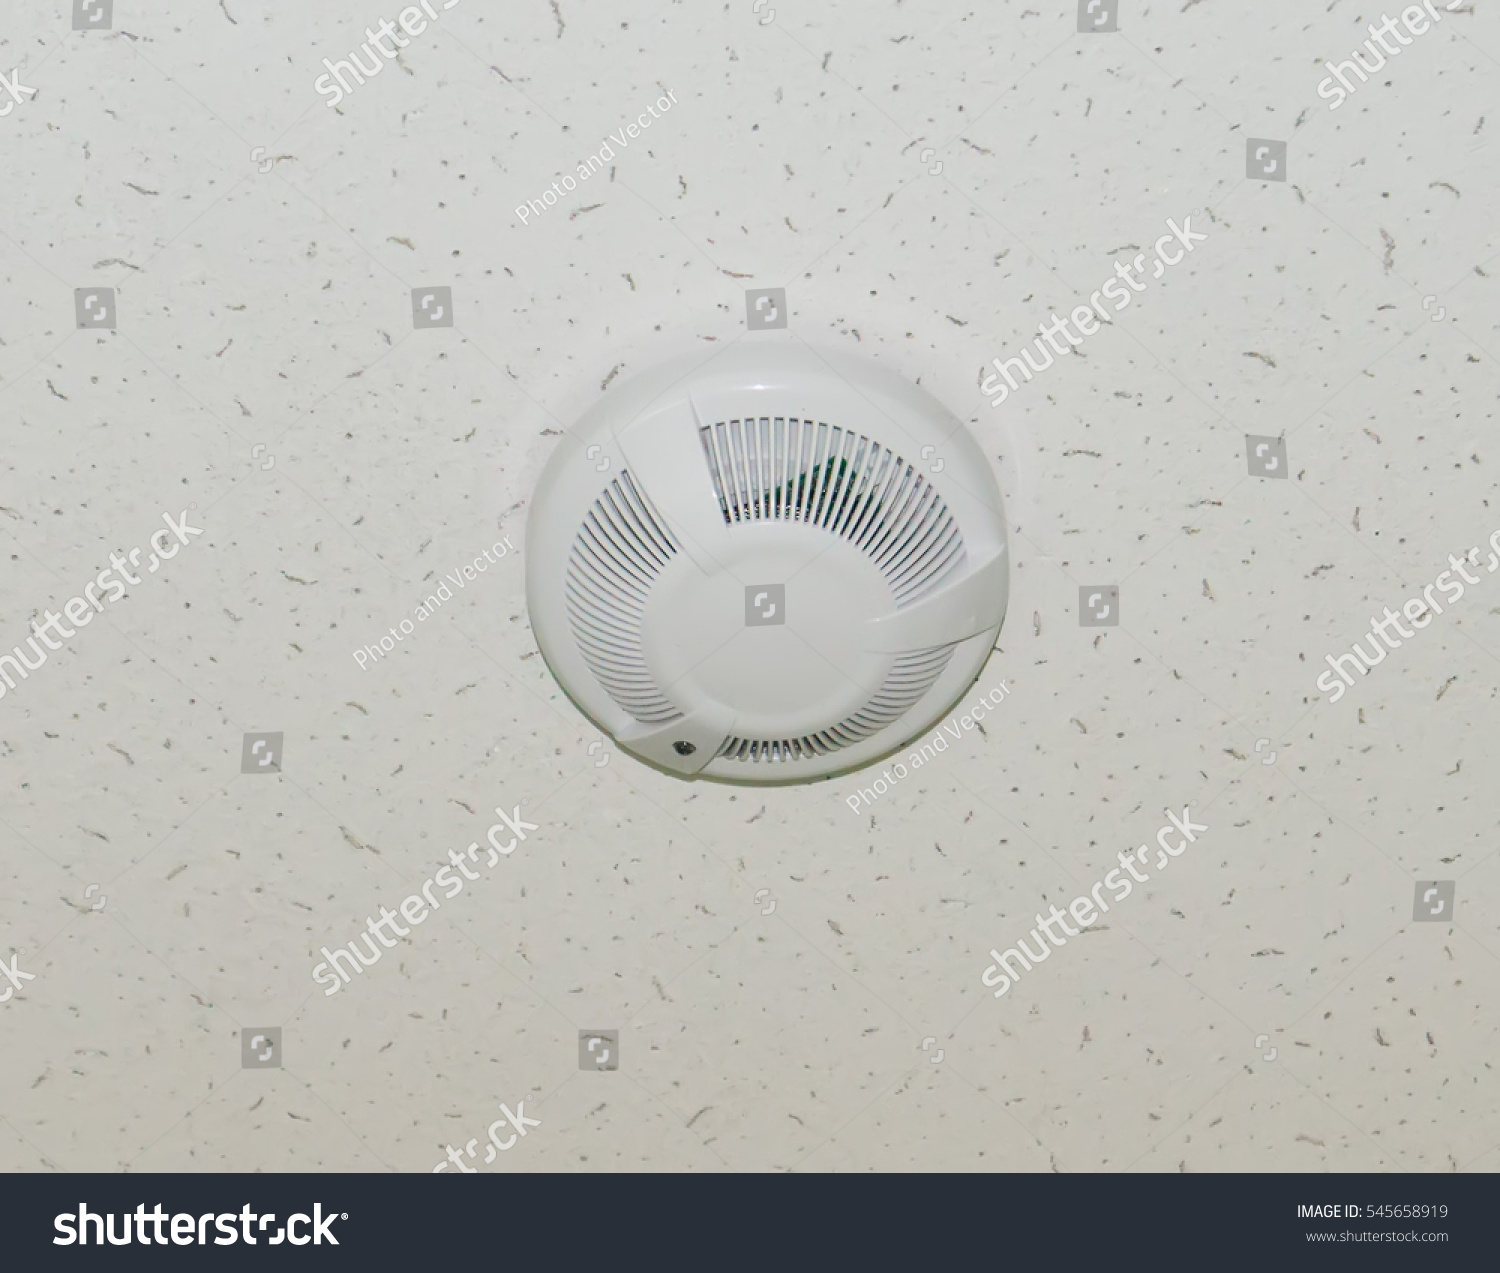 Fire Alarm On Ceiling Smoke Detectors Stock Photo Edit Now